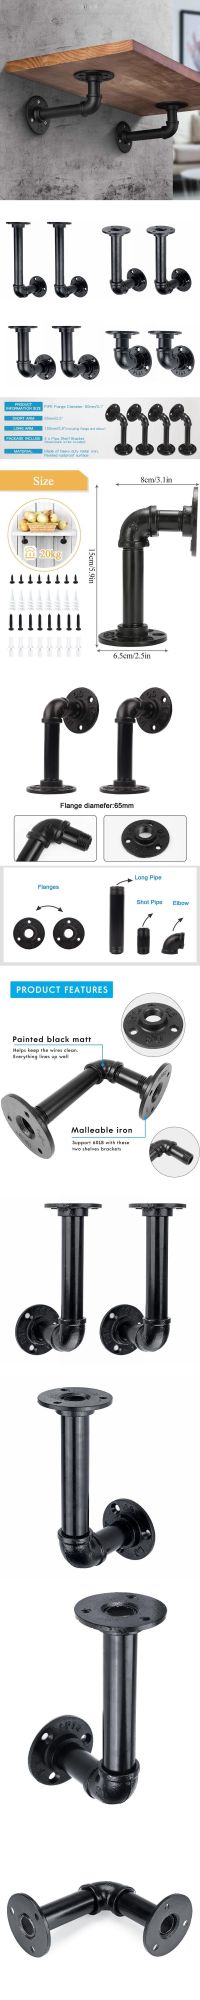 Bsp Standard Industrial Flange Black Malleable Pipe Fittings Carbon Steel Thread Short/Long Pipe Nipples Iron Bracket